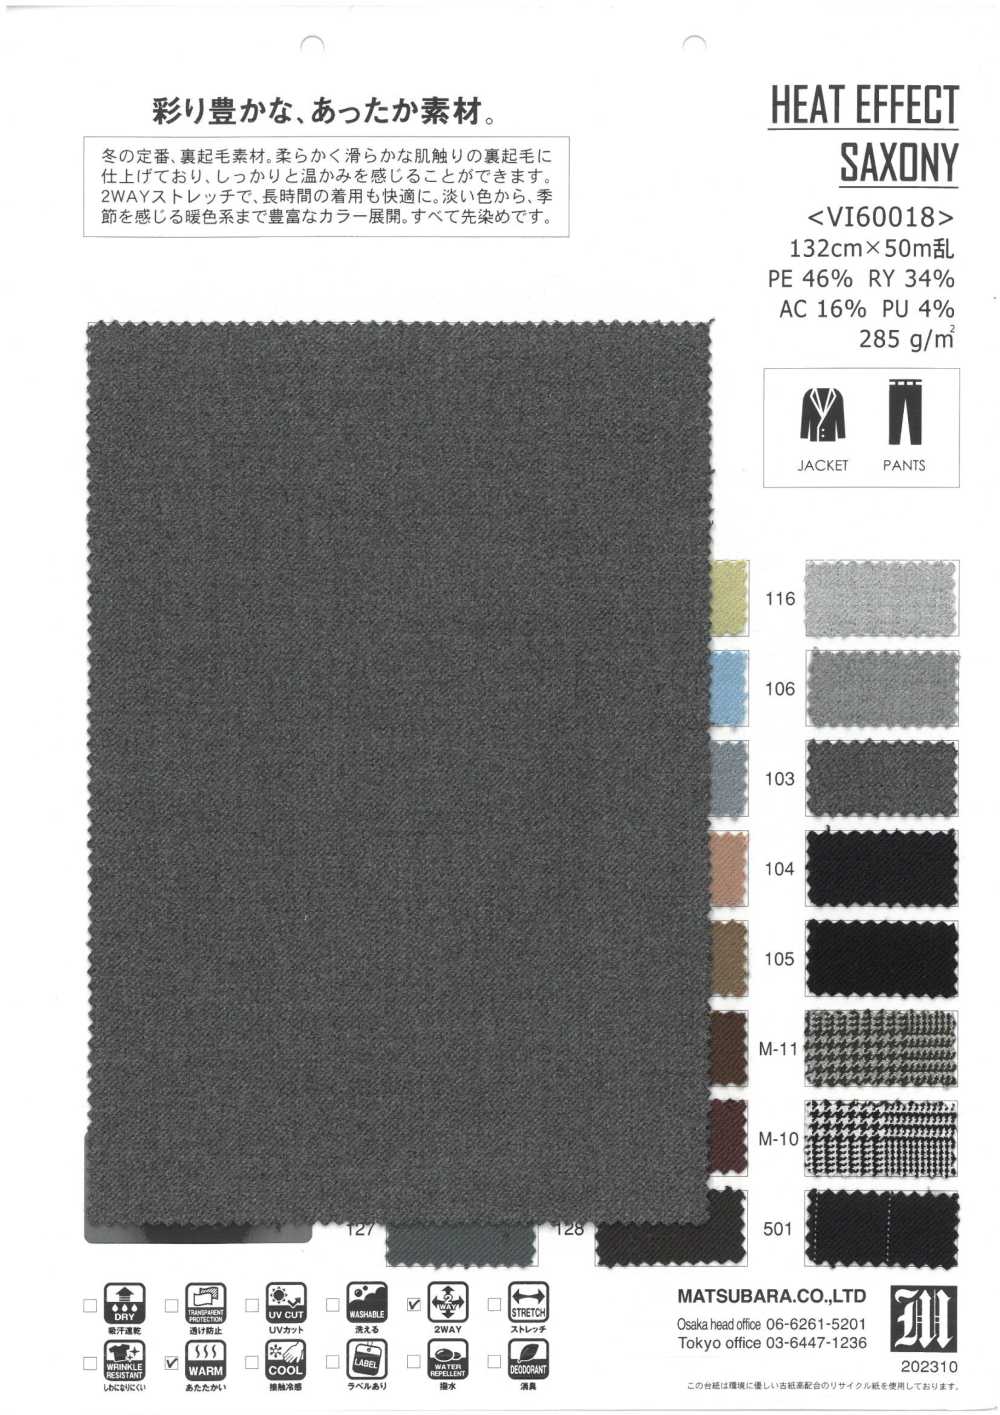 VI60018 HEAT EFFECT SAXONY[Textile / Fabric] Matsubara